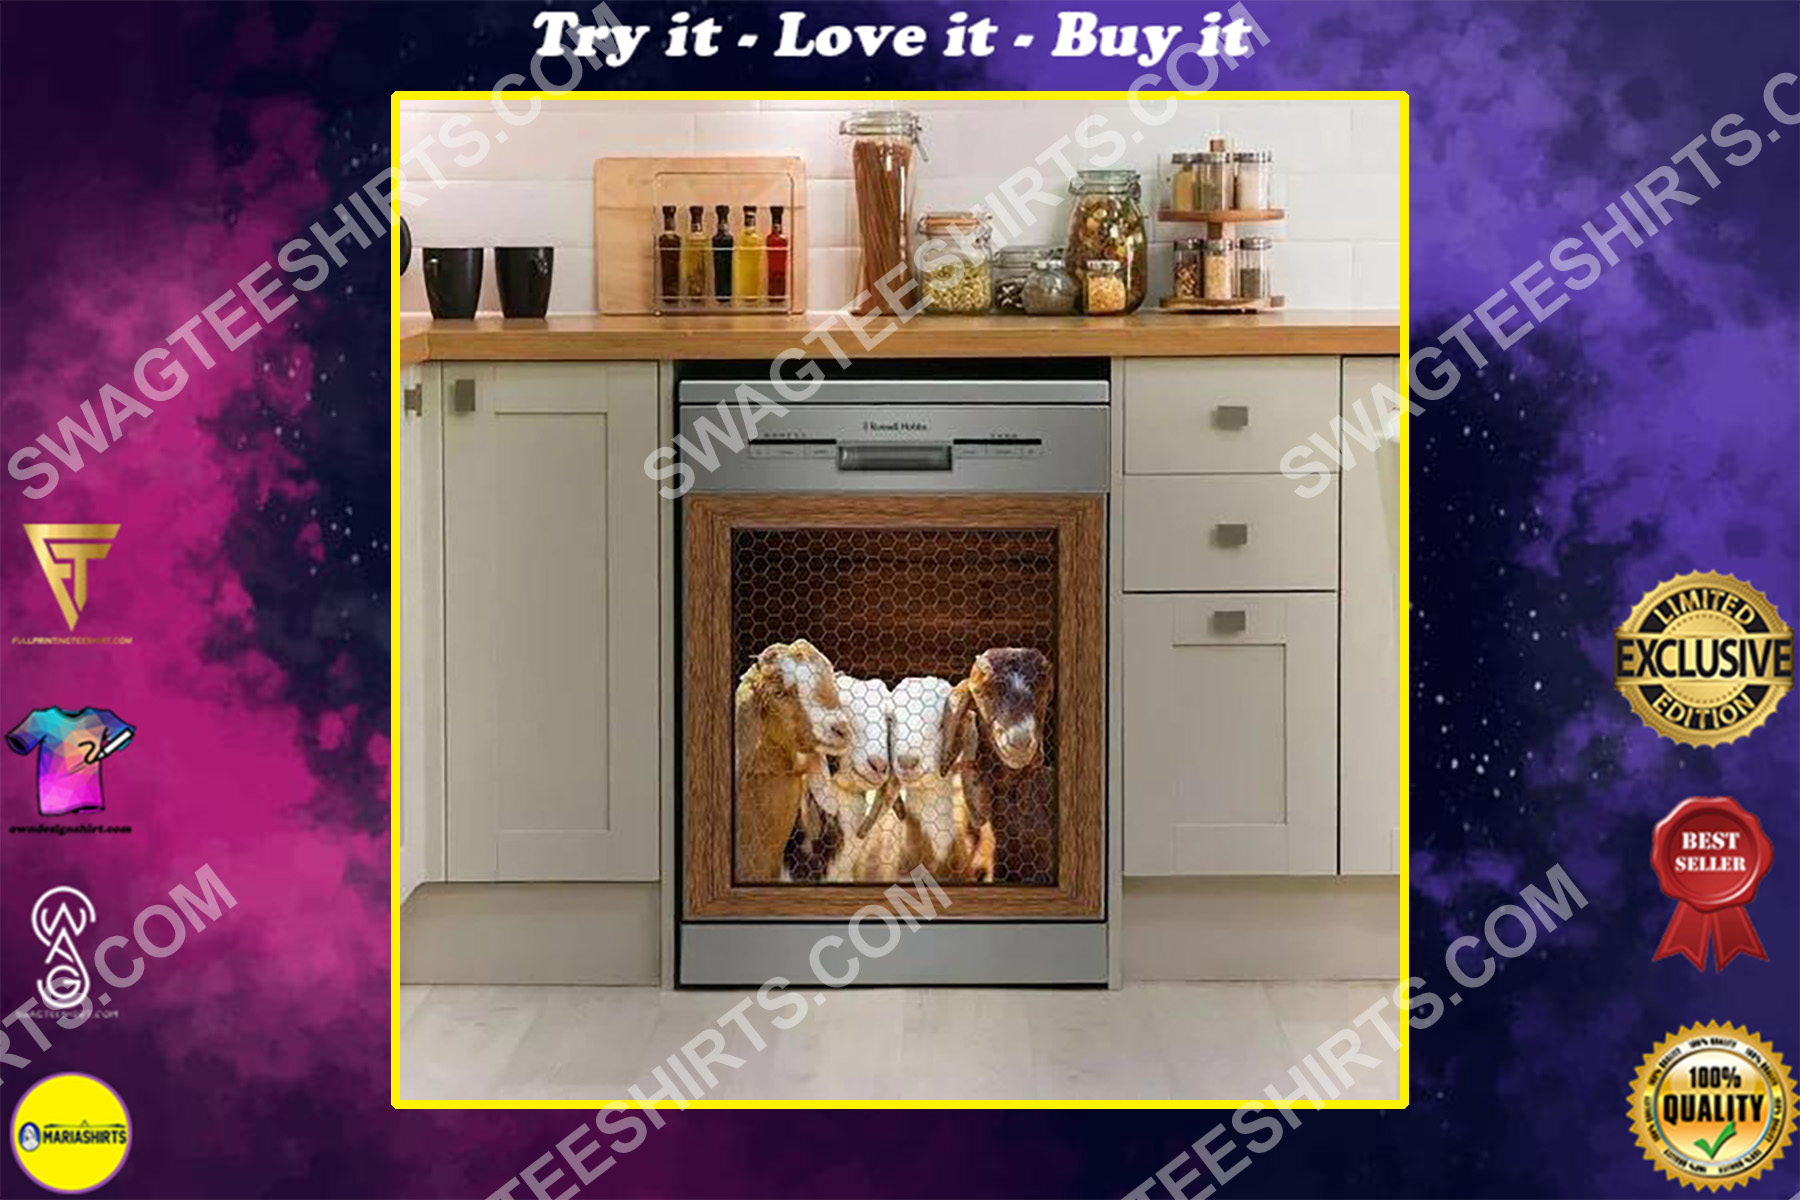 goat lovers kitchen decorative dishwasher magnet cover